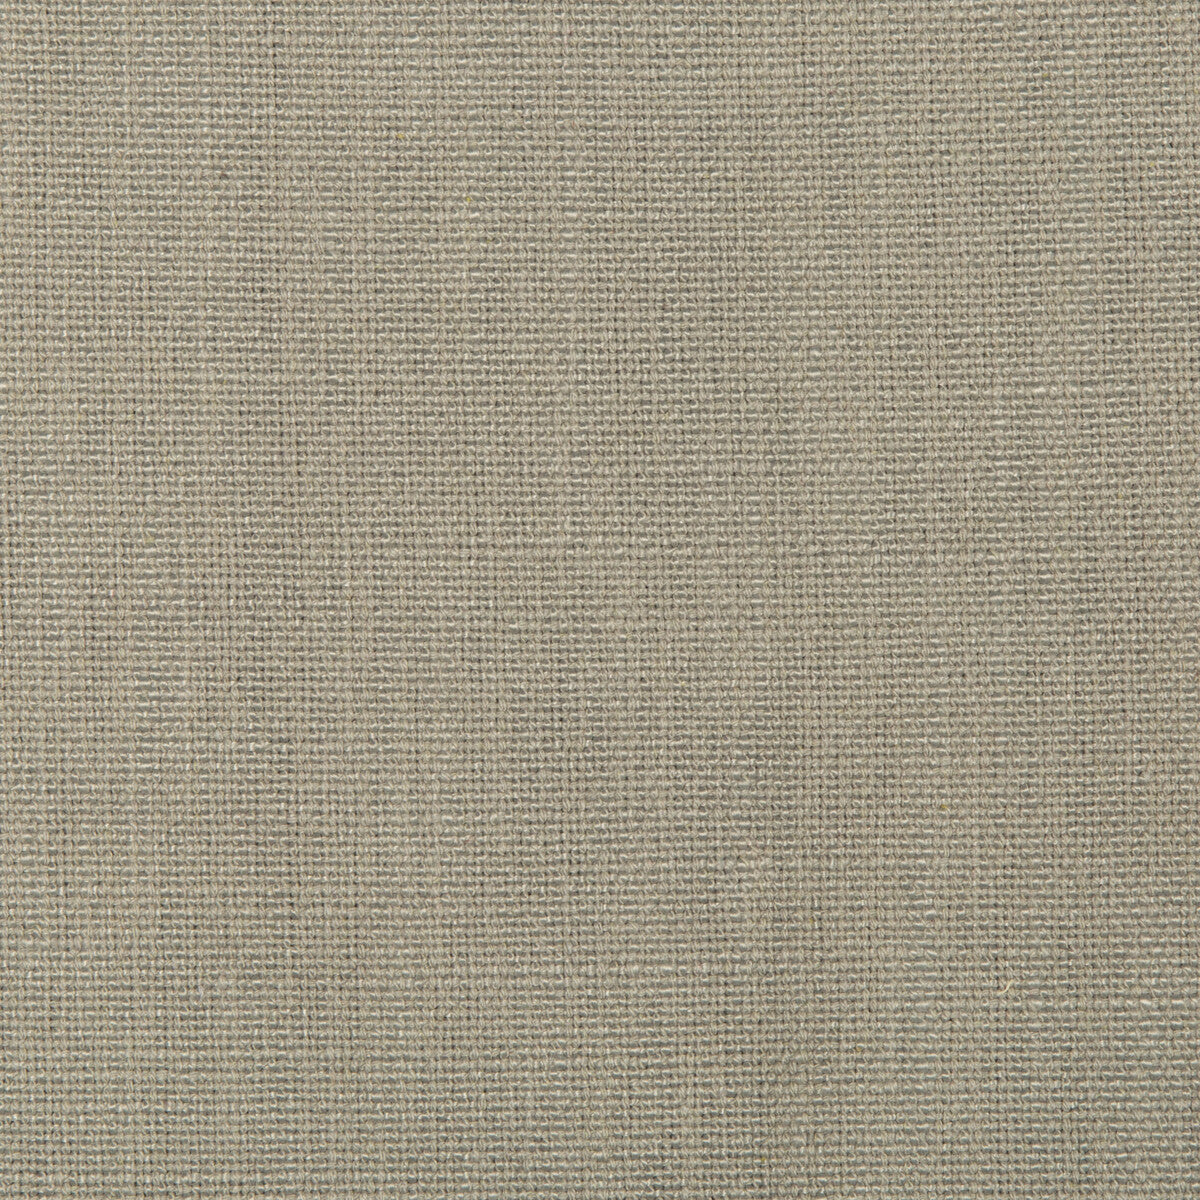 Kravet Smart fabric in 35226-1101 color - pattern 35226.1101.0 - by Kravet Smart in the Performance Kravetarmor collection